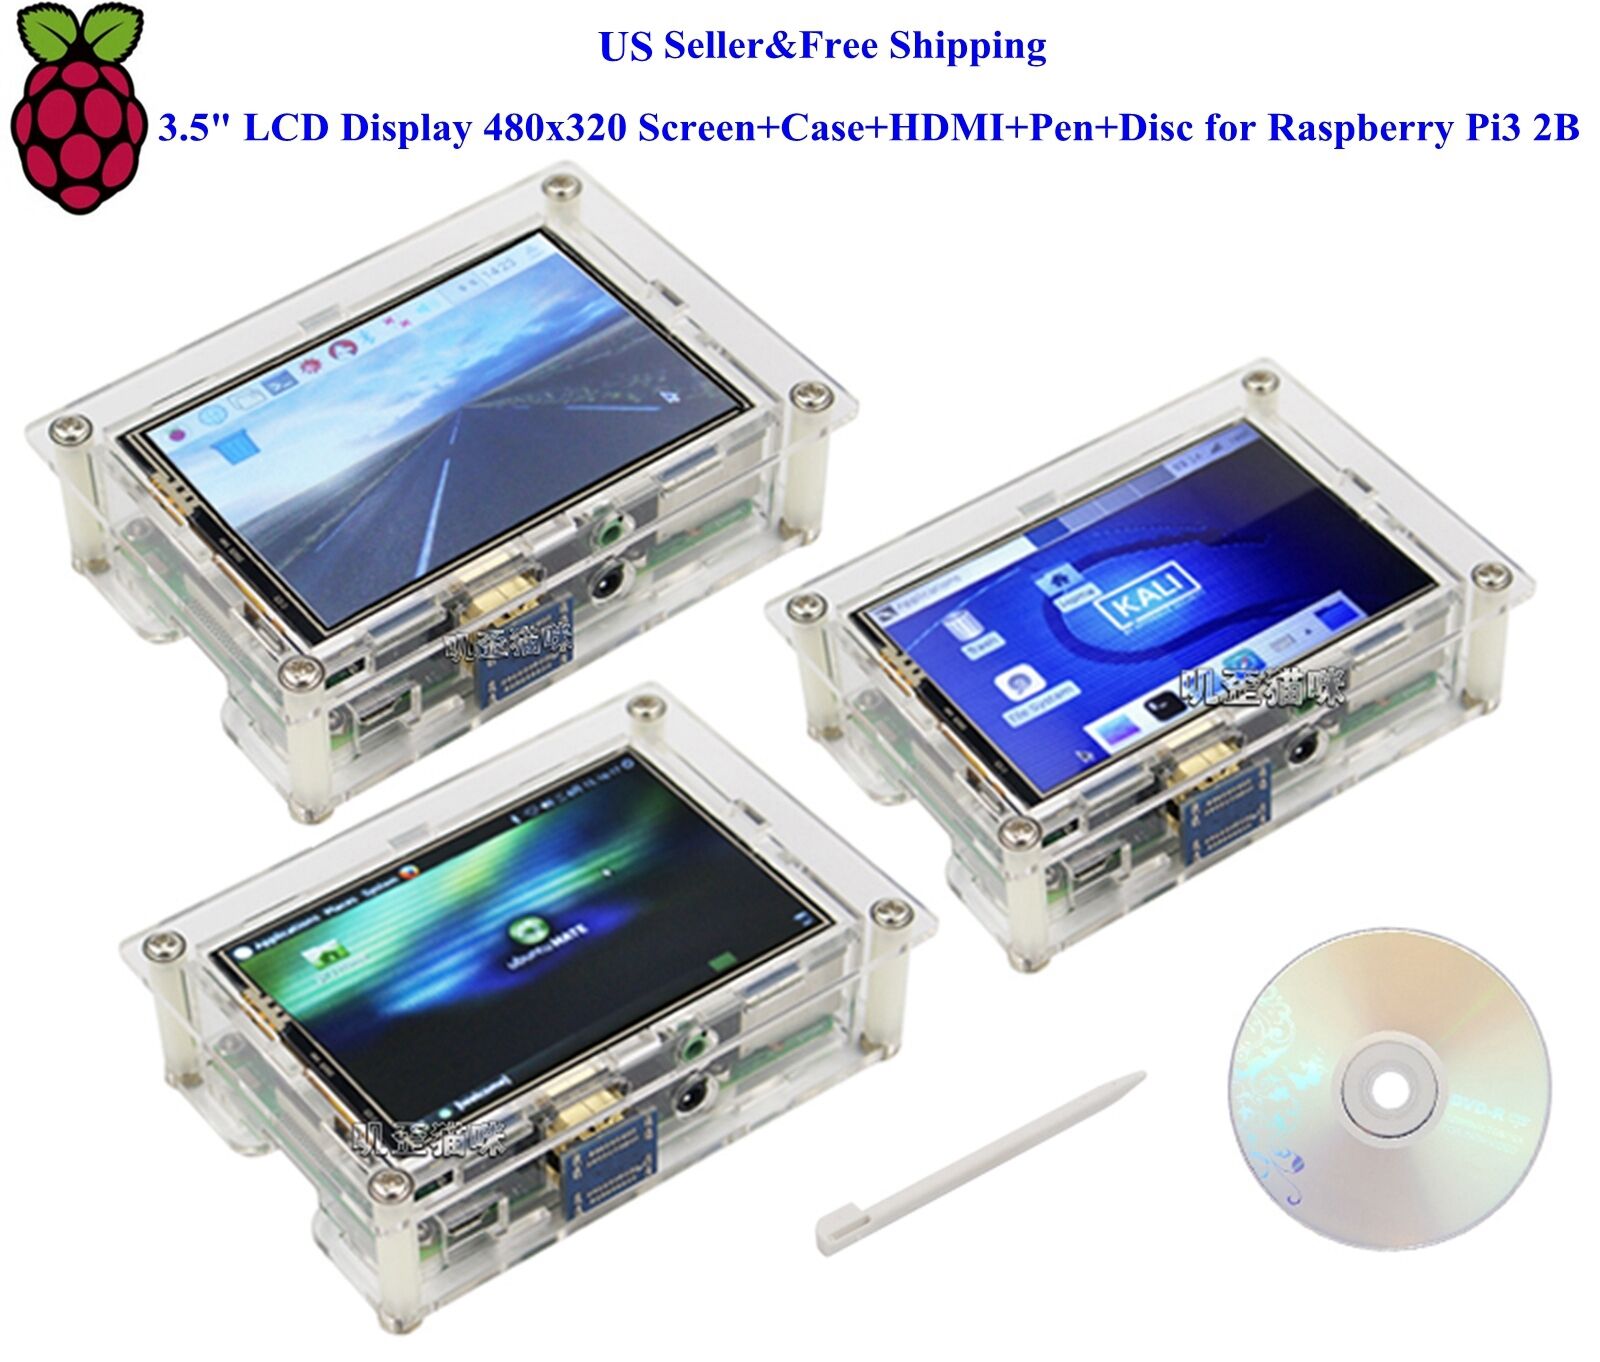 US 3.5" HDMI LCD Display 480x320 Screen+Case+HDMI+Pen+Disc for Raspberry Pi3 2B